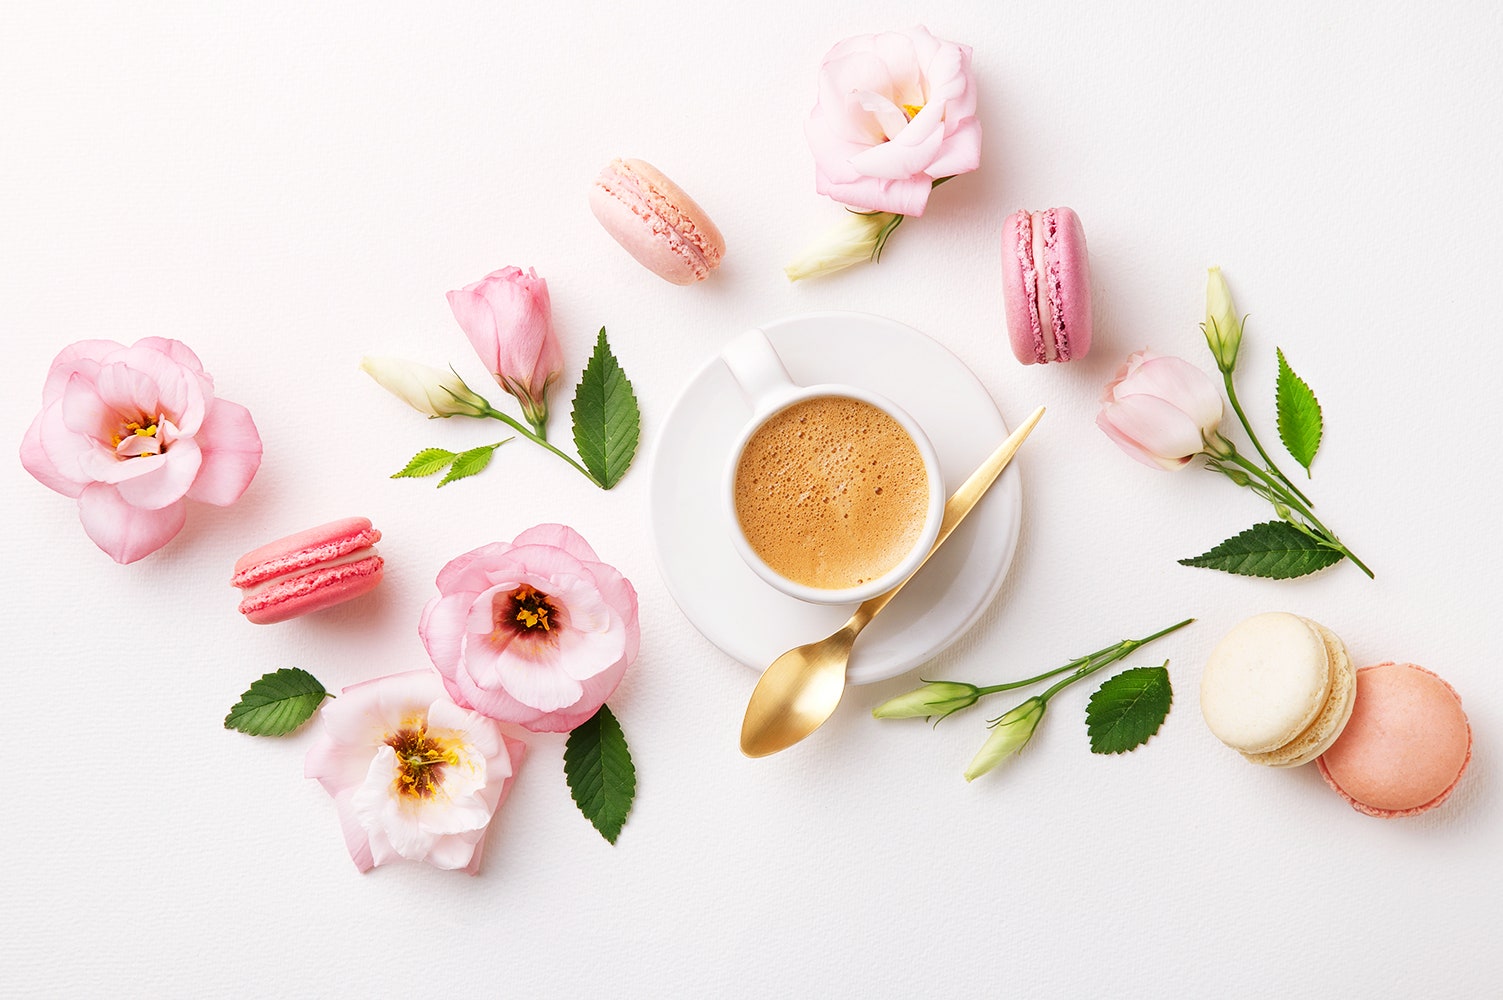 Новинки парфюмерии весны 2019 со съедобными ароматами фото описание